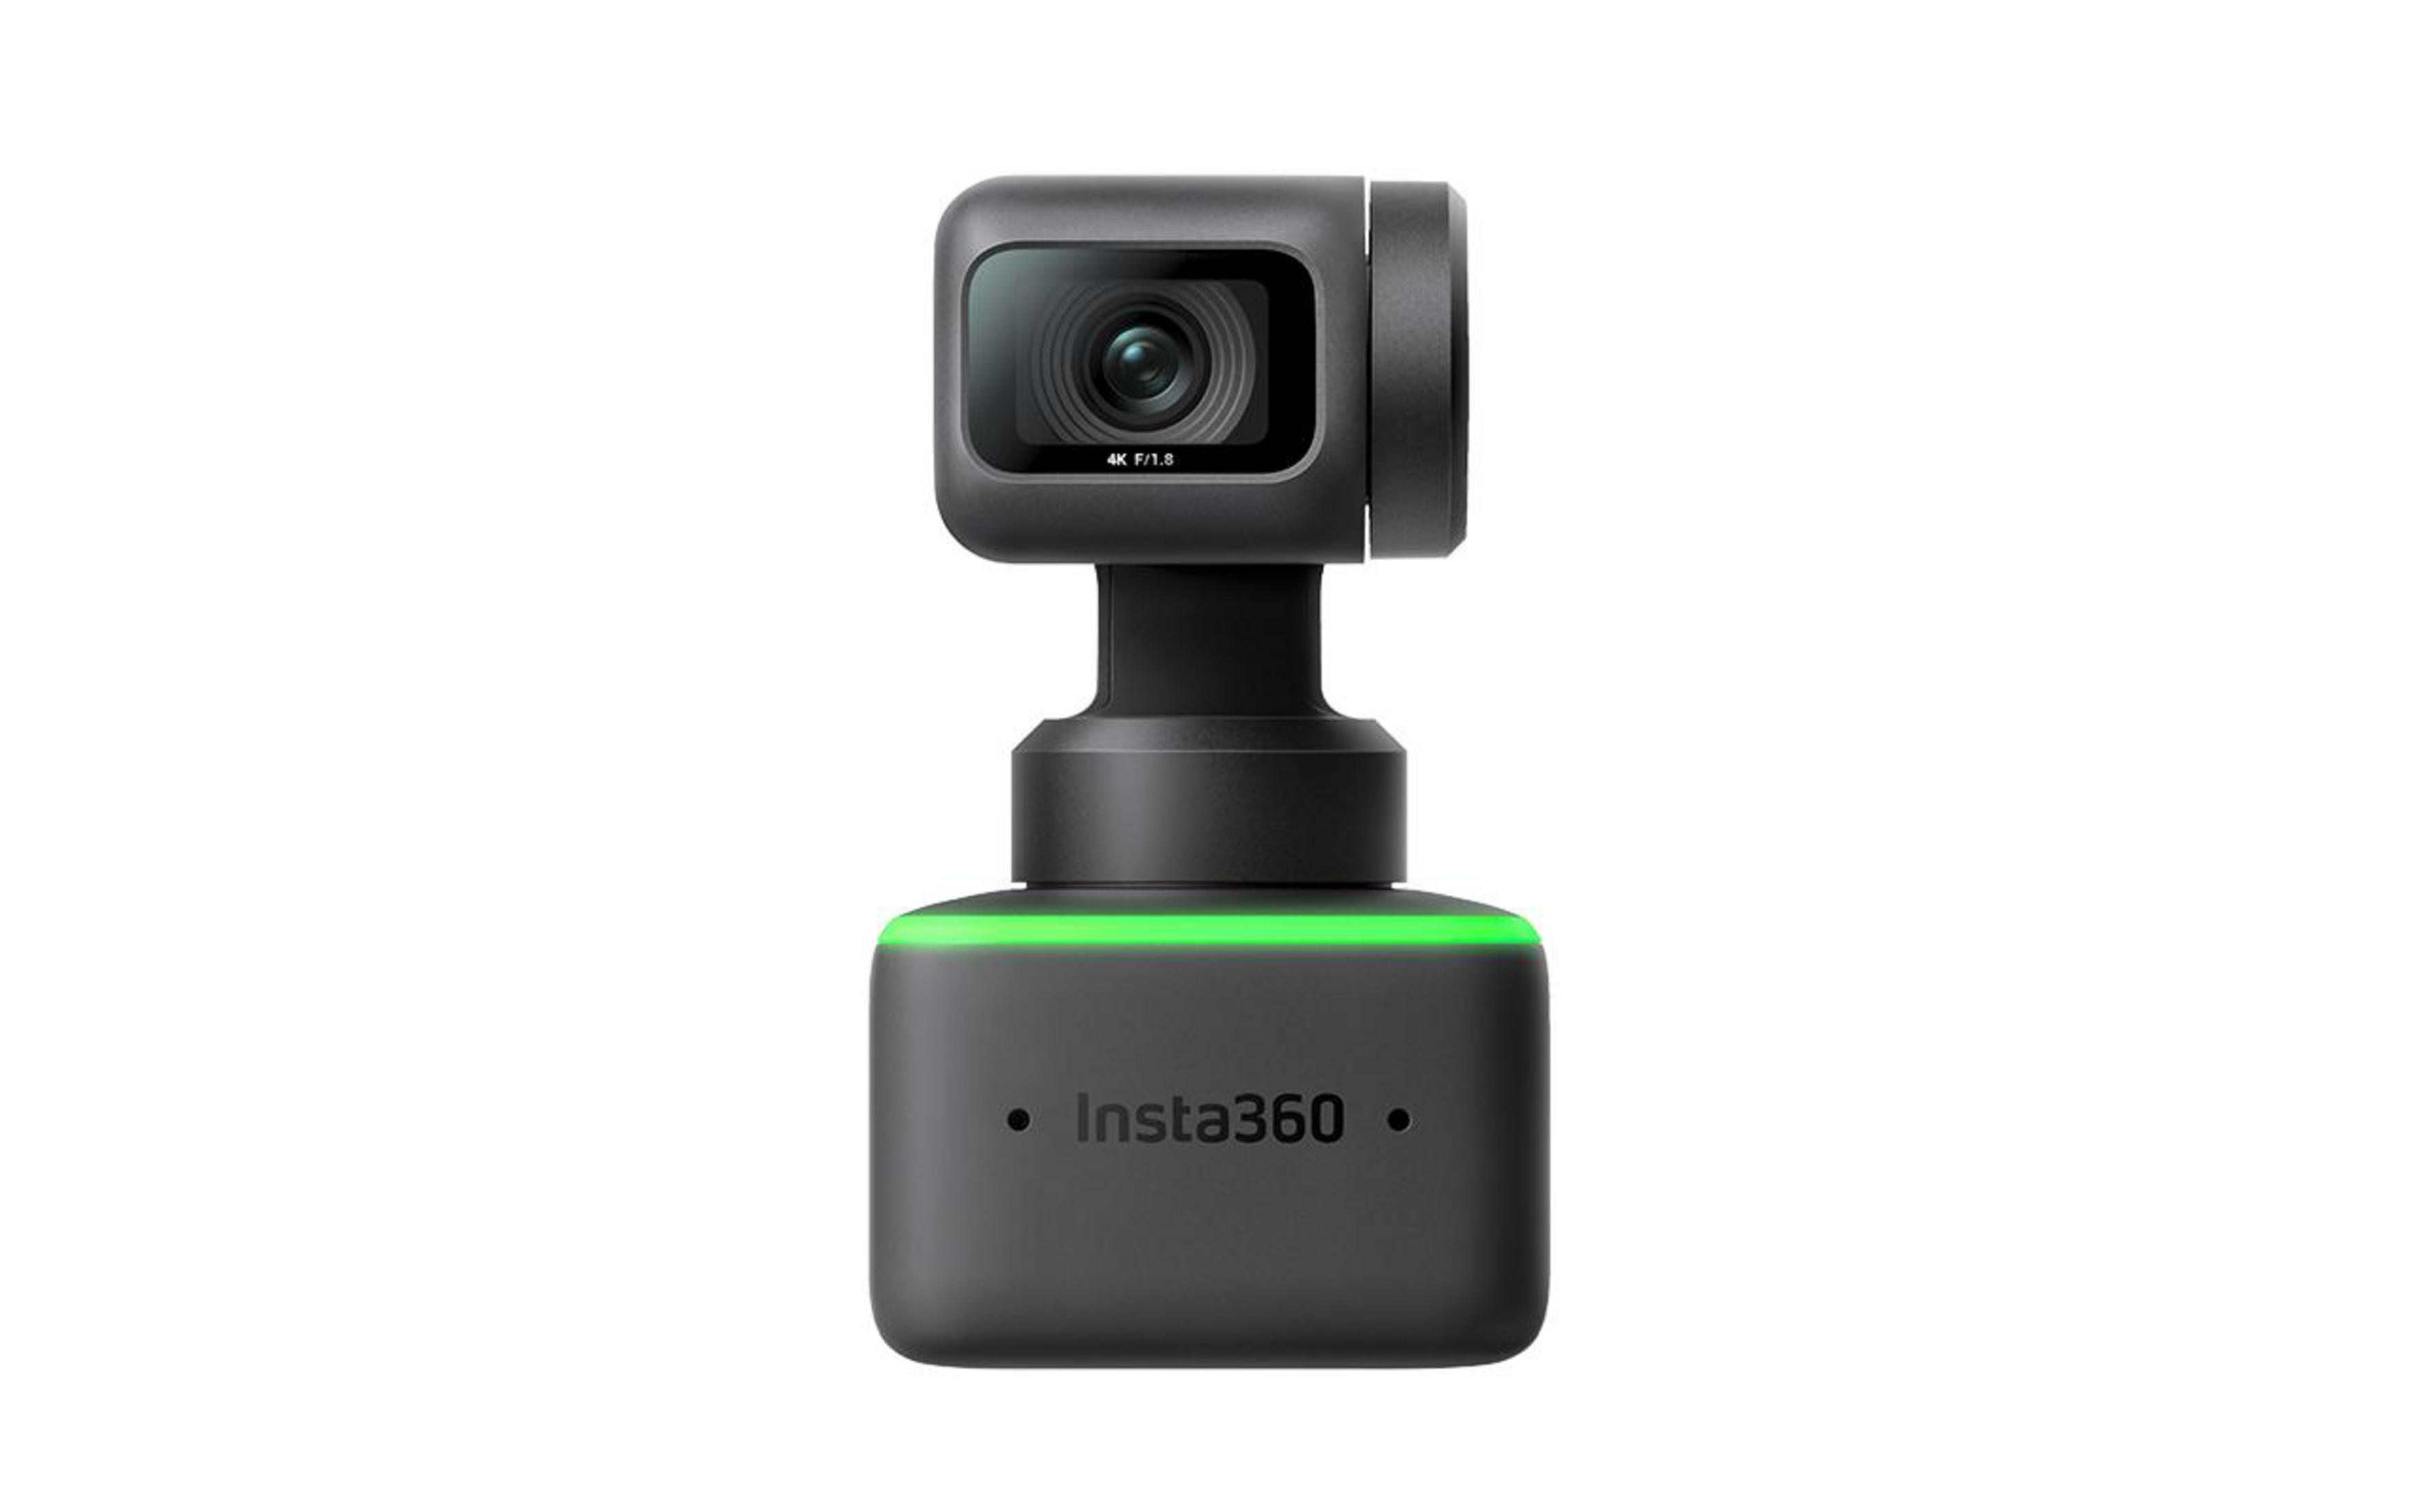 LINK Webcam INSTA360 853557 Intelligente 4K